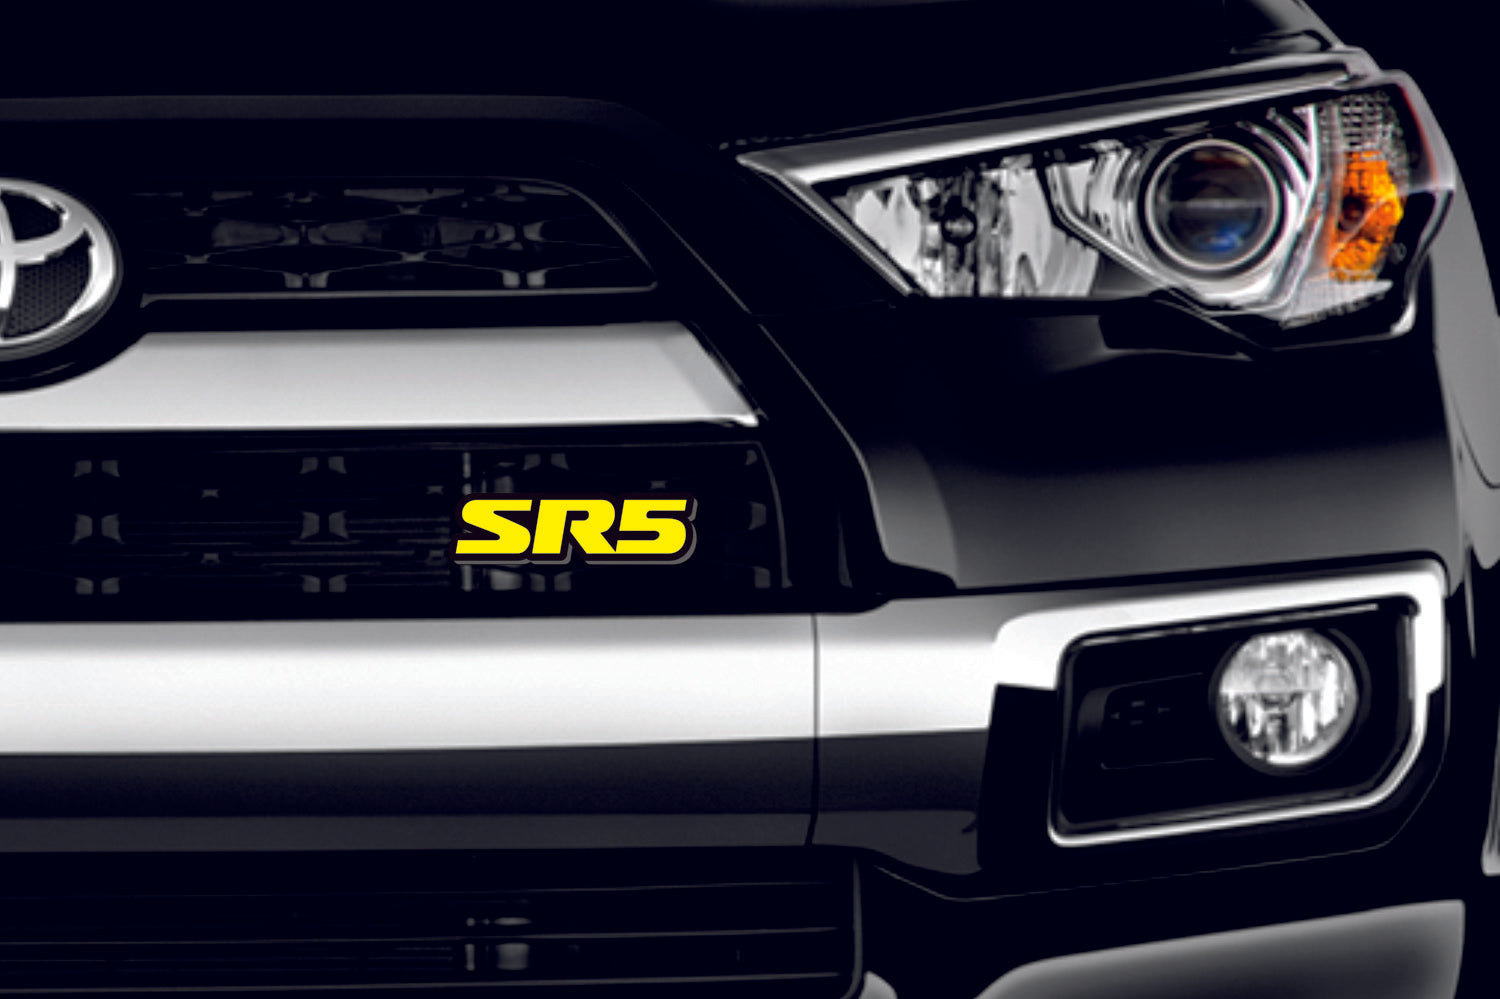 Toyota Radiator grille emblem with SR5 logo (Type 2)